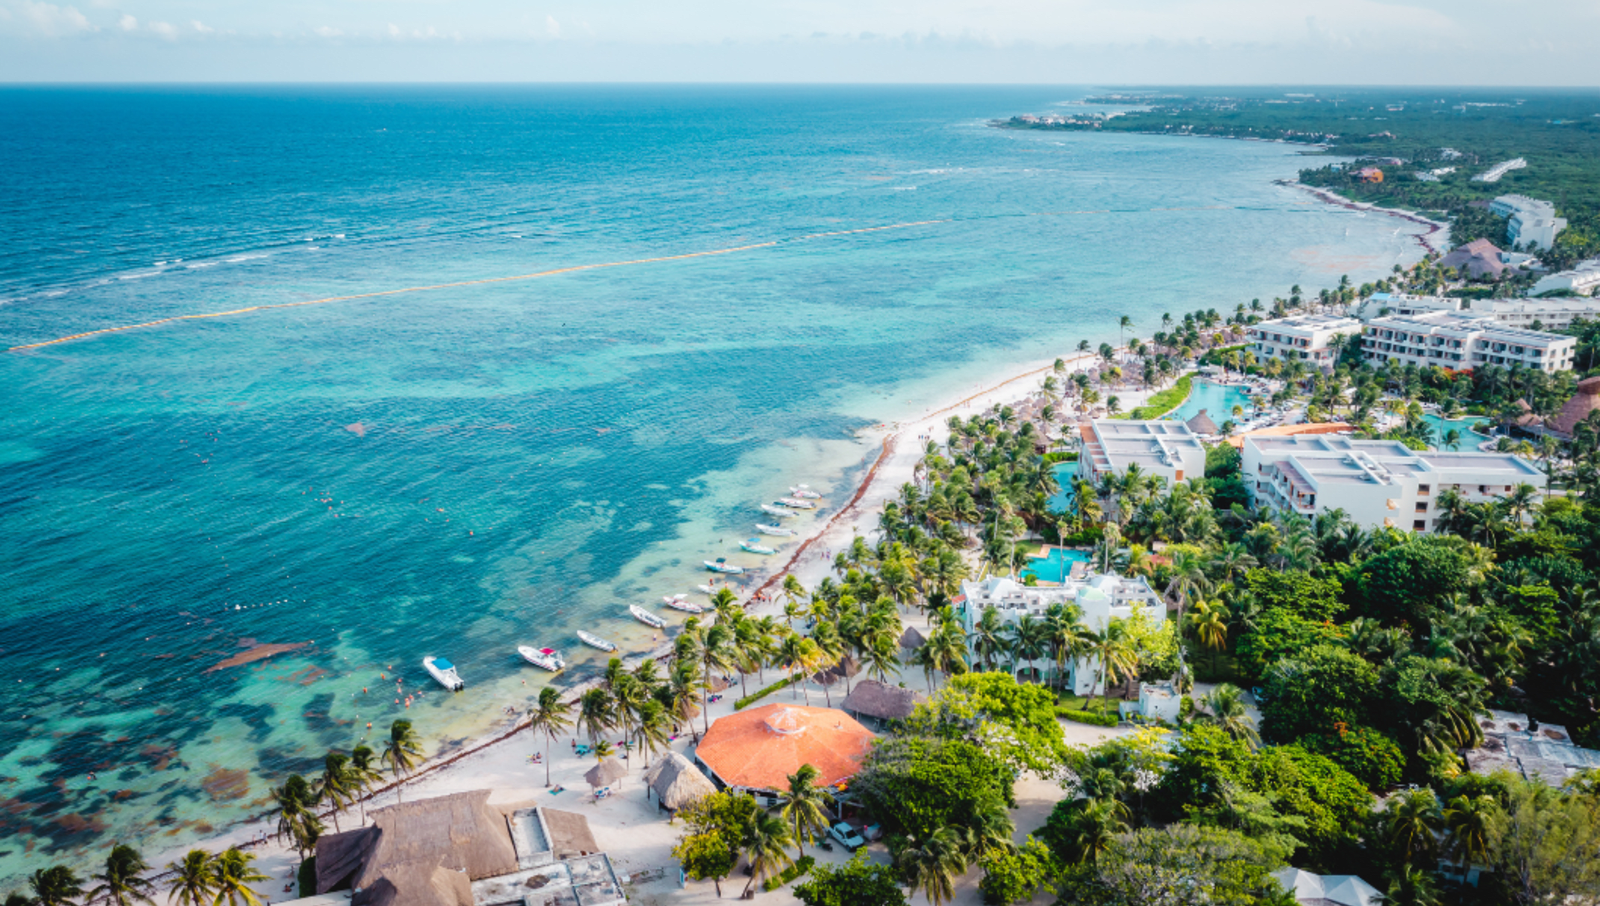 Quintana Roo Mexico coastline and ocean landscape